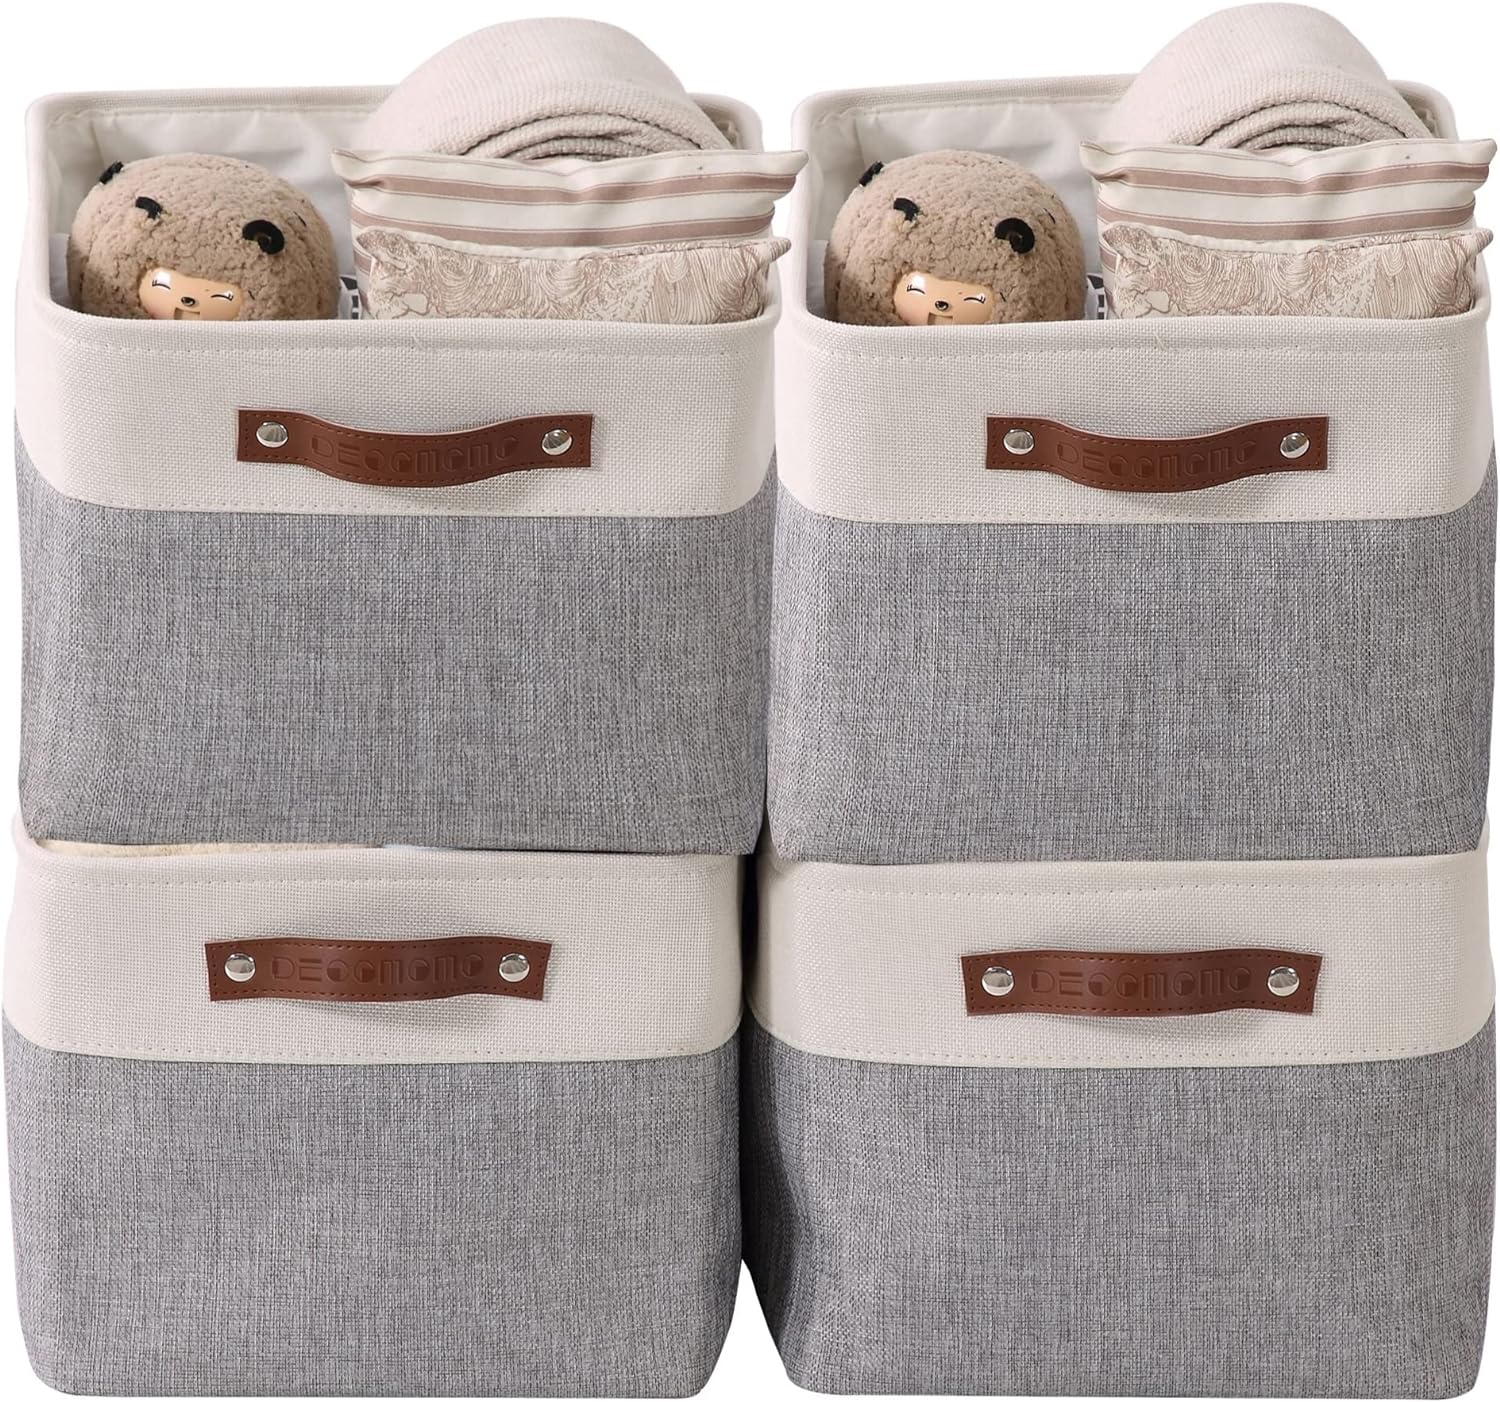 DECOMOMO Storage Bins | Fabric Storage Basket for Shelves for Organizing Closet Shelf Nursery Toy | Decorative Large Linen Closet Organizer Bins with Handles (Grey and White, XL - 4 Pack)